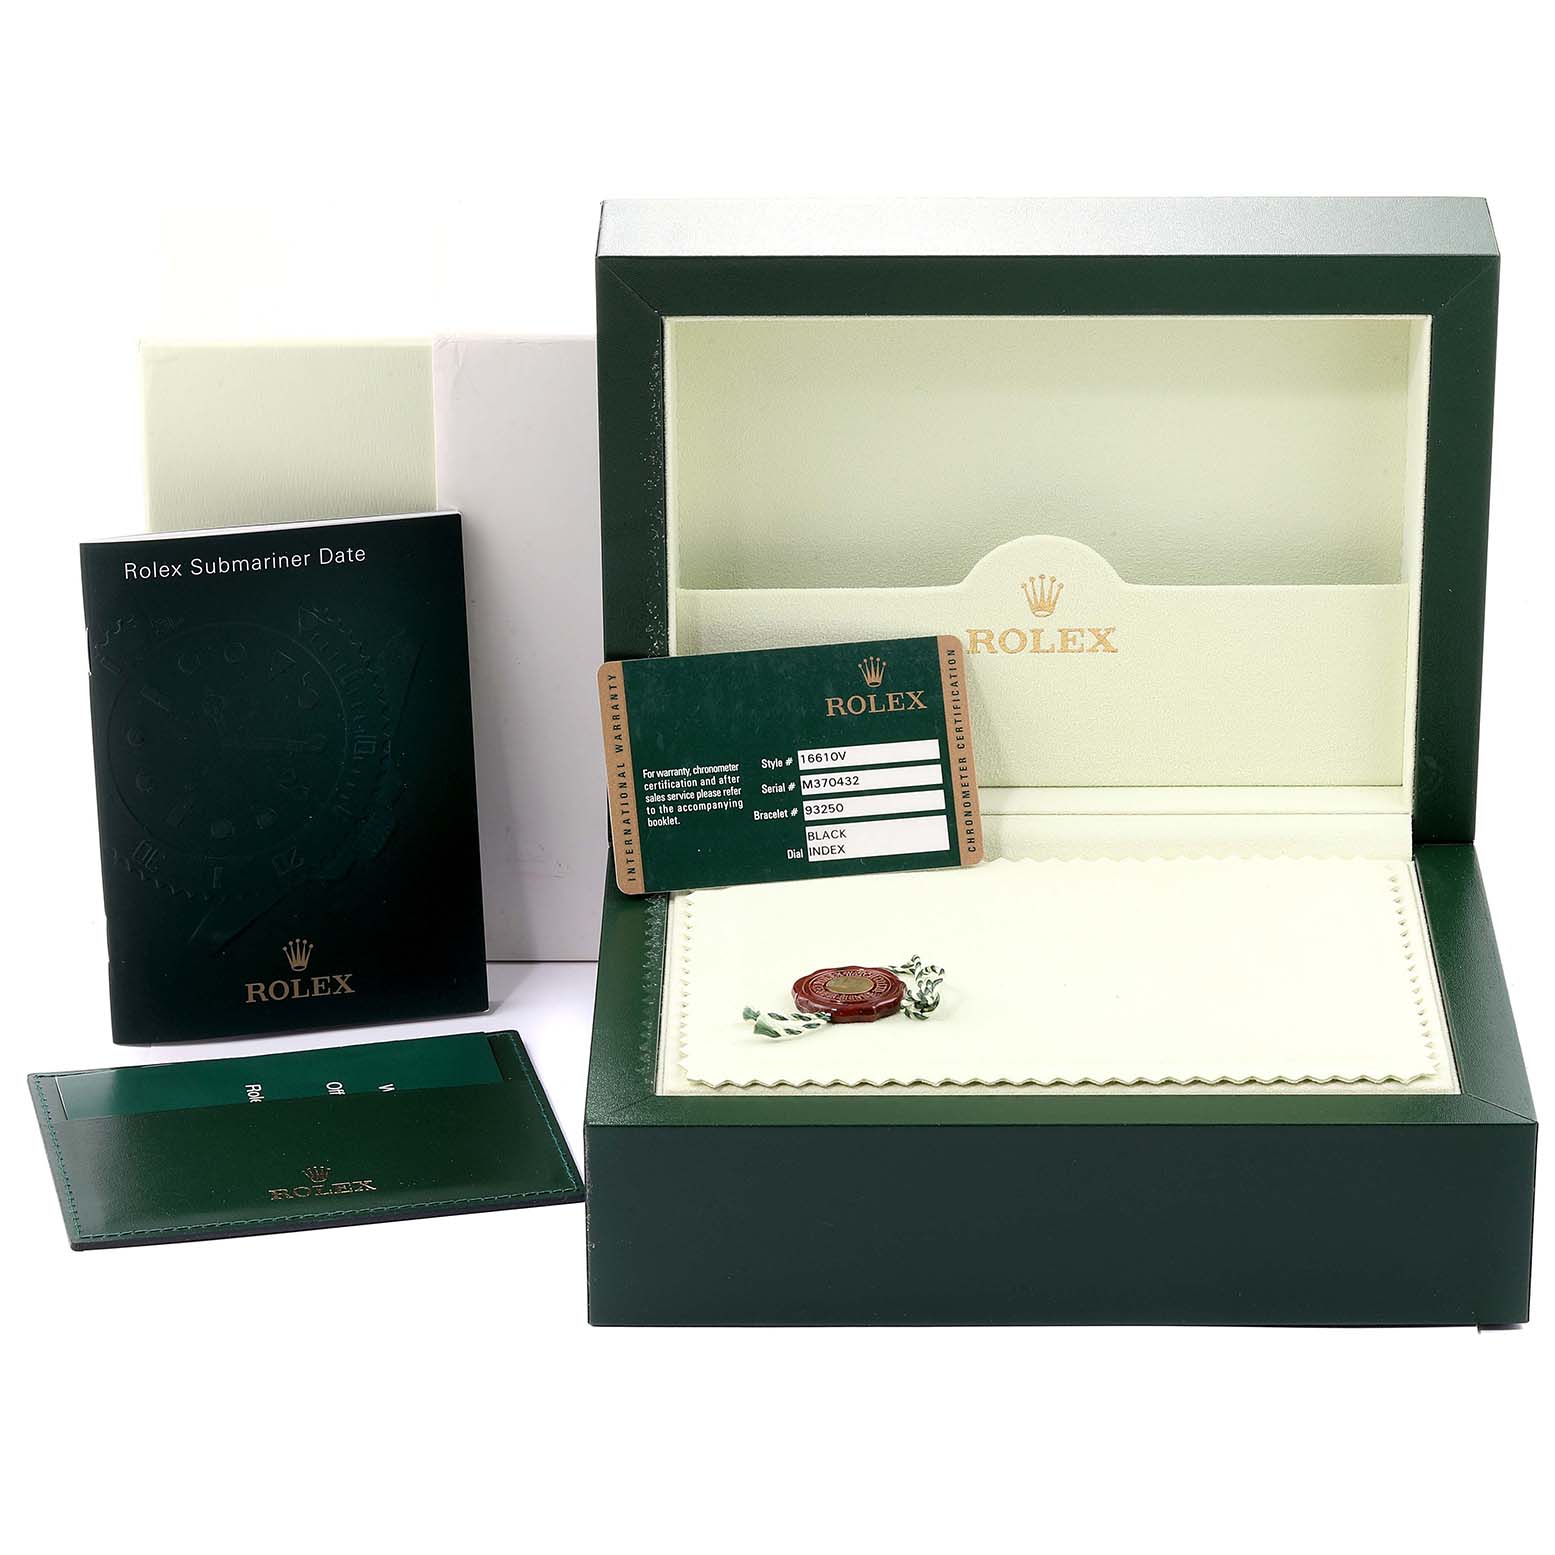 Rolex Submariner 50th Anniversary Green Kermit Watch 16610LV Box Card ...